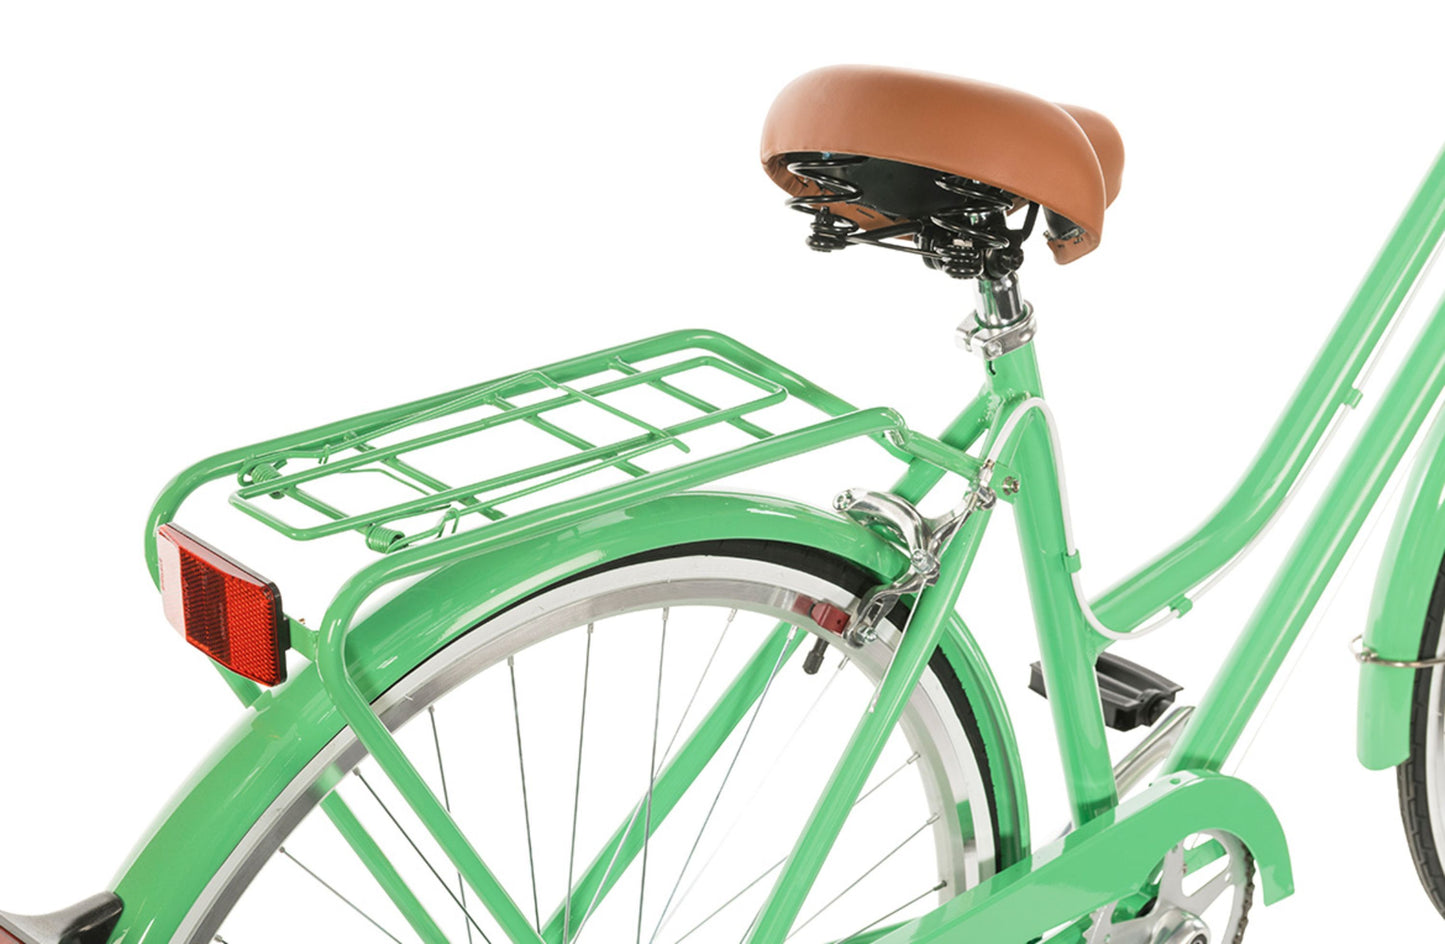 Ladies Lite Vintage Bike in Mint Green showing rear pannier rack and mudguard from Reid Cycles Australia